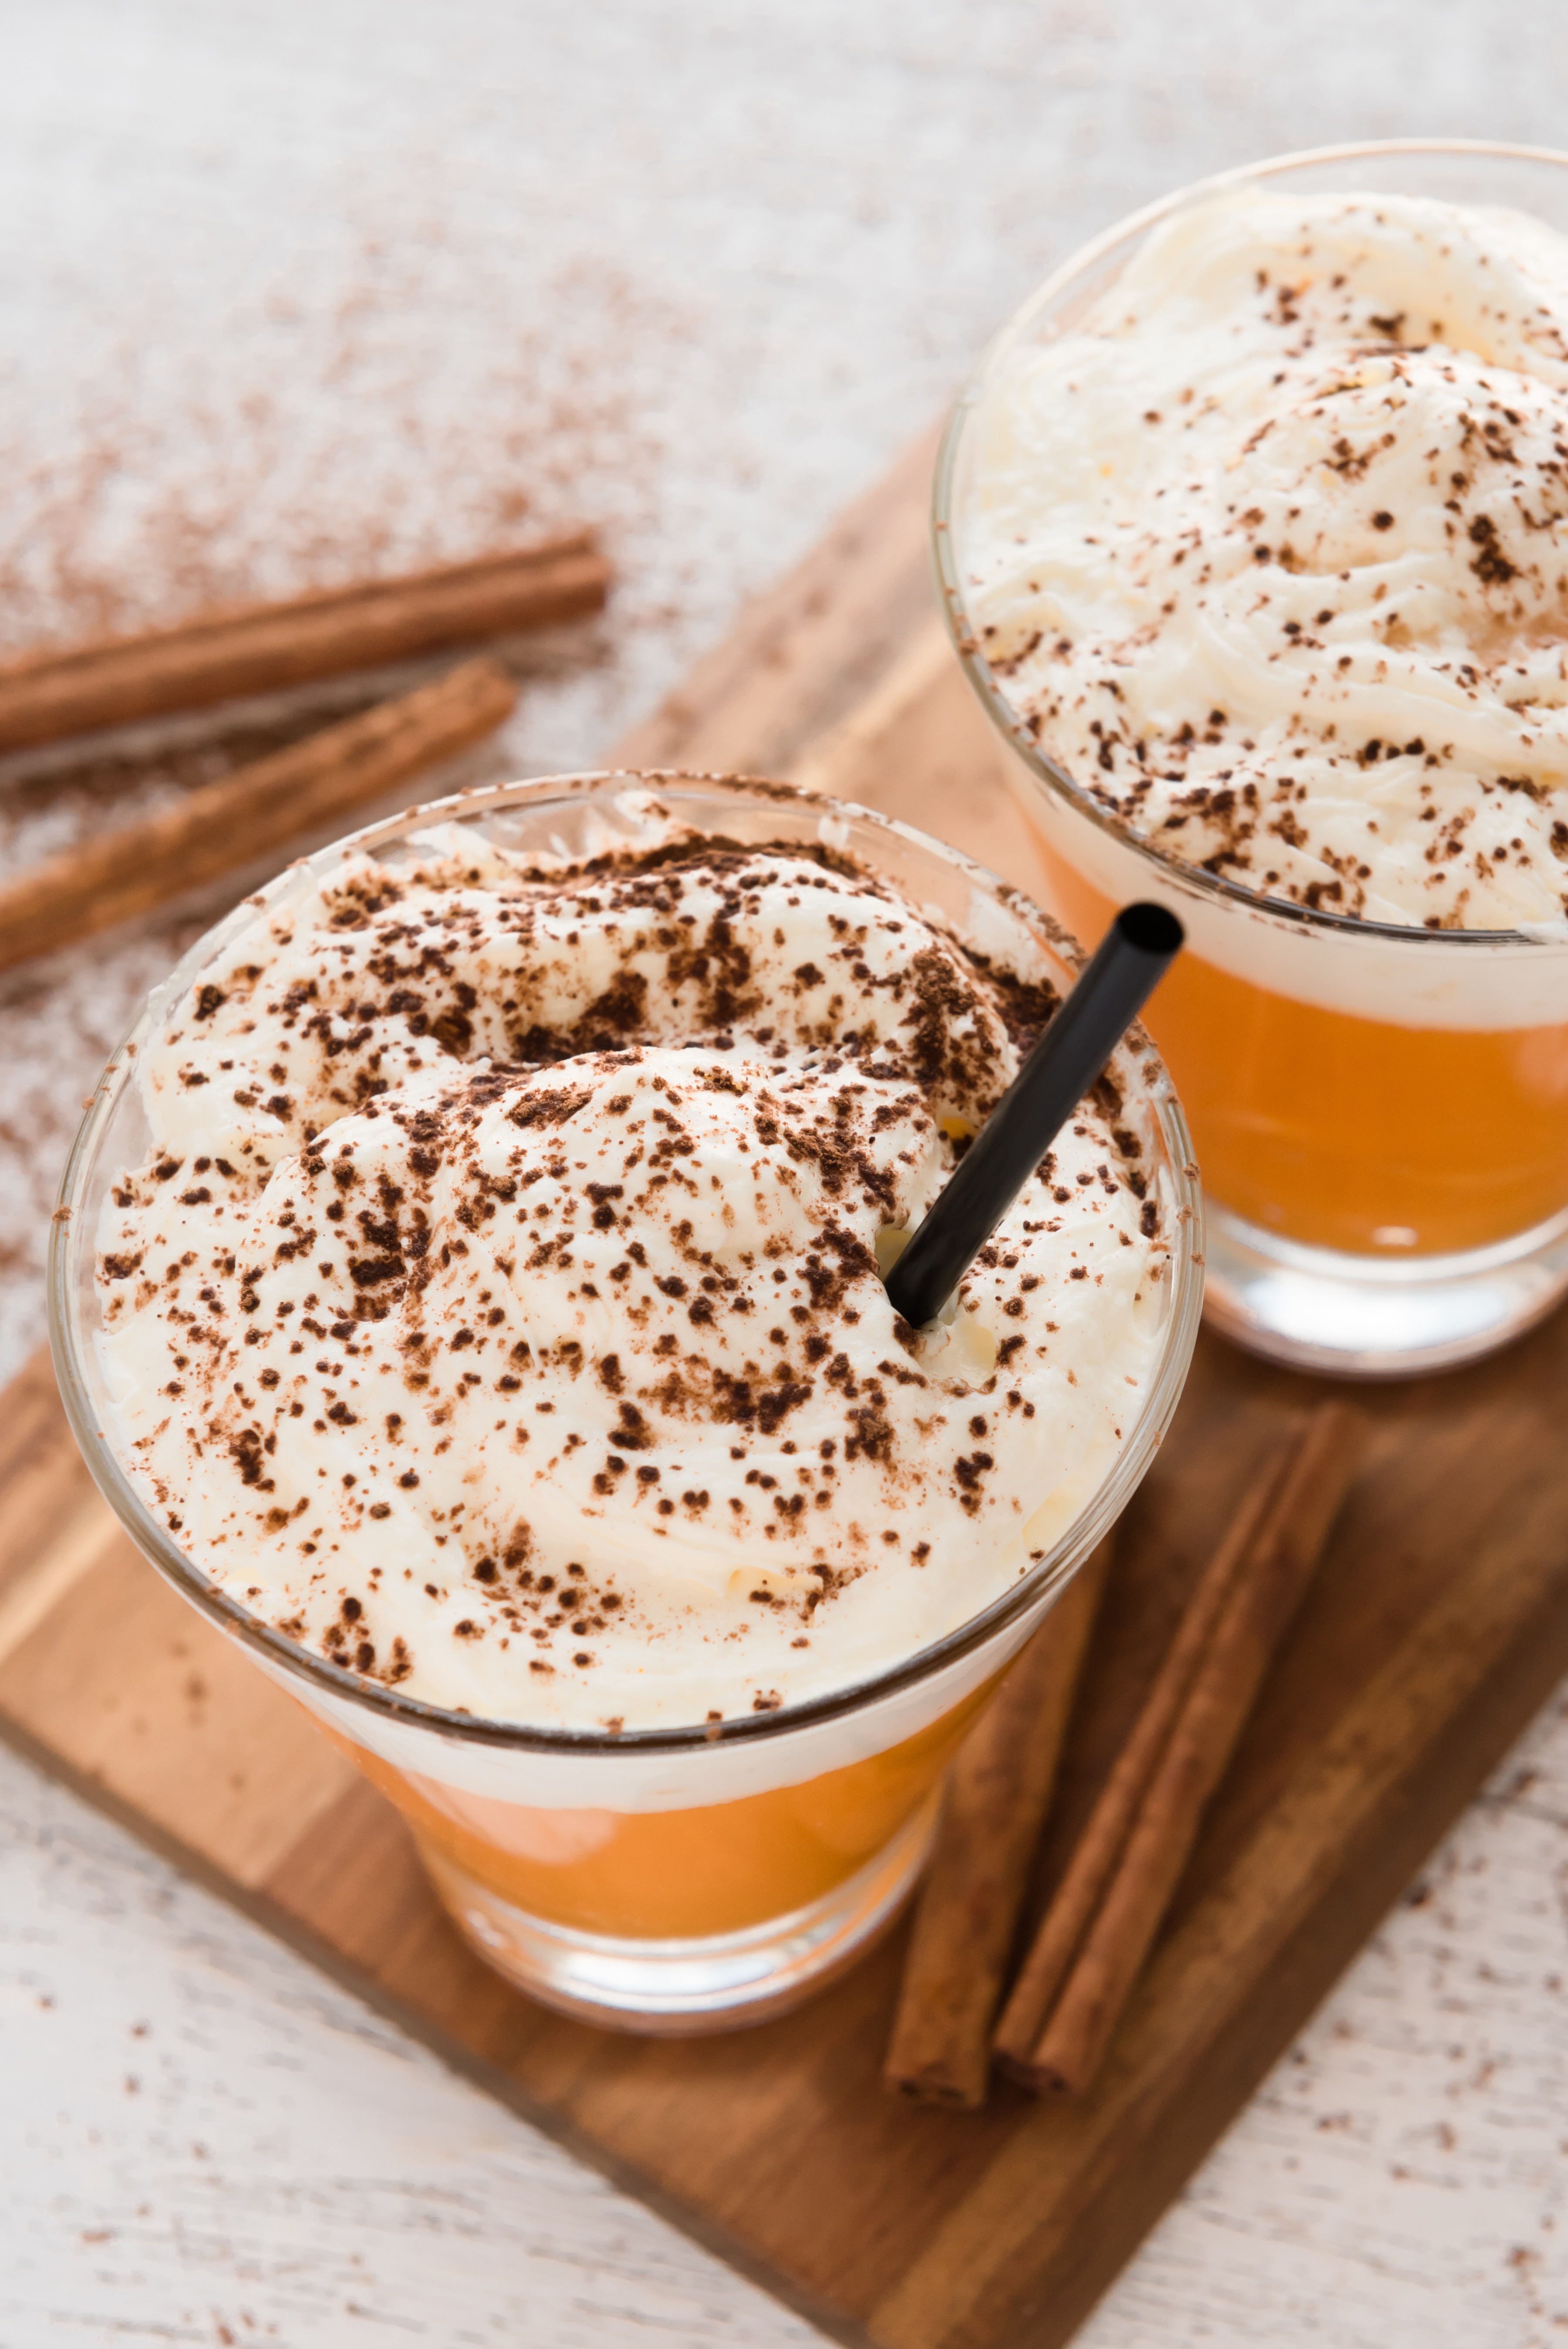 Sugar-free pumpkin cocktail with cinnamon and cream